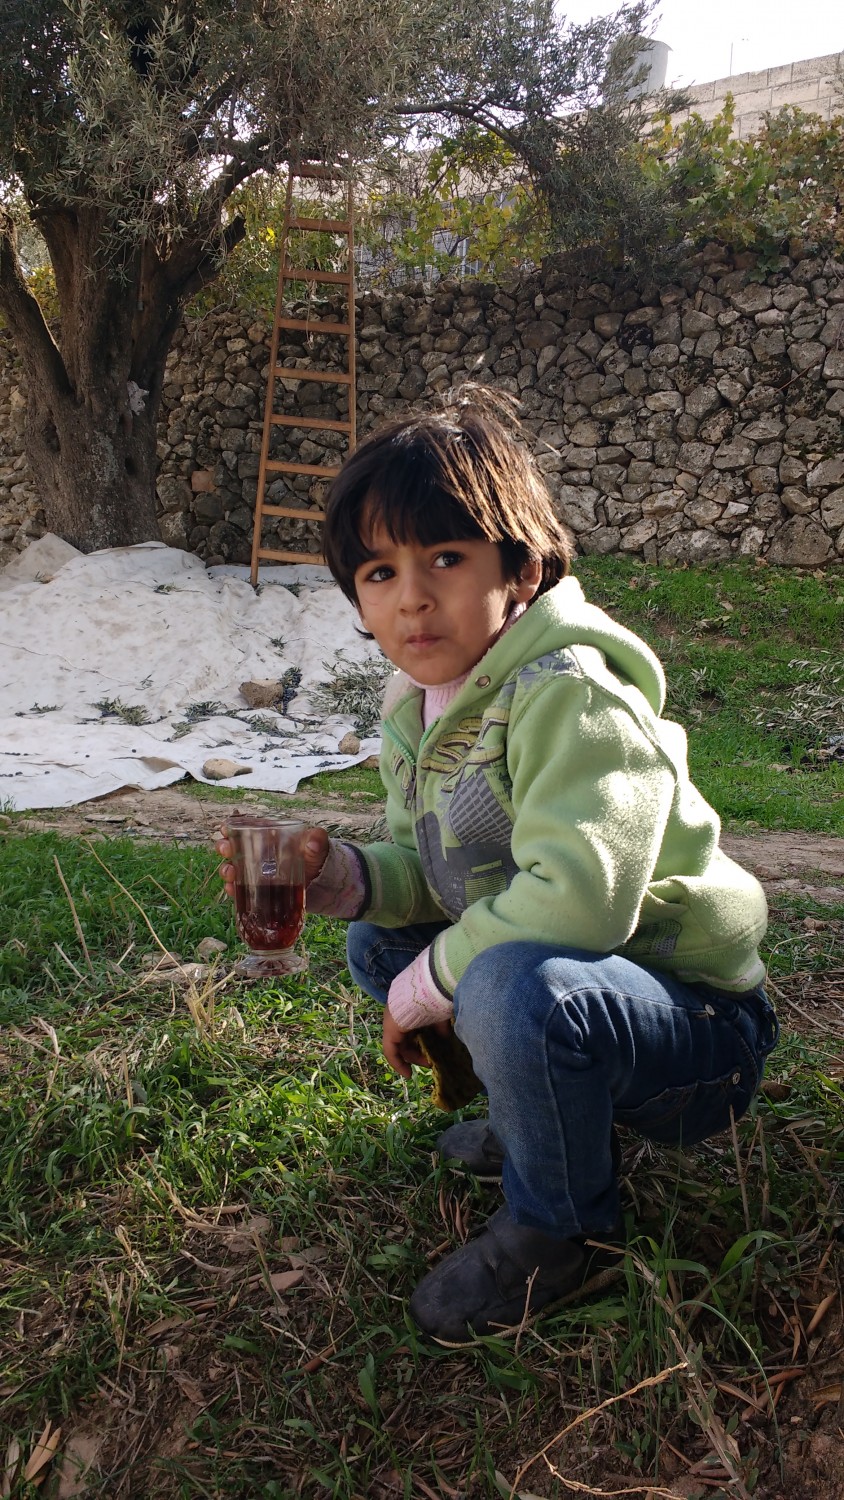 Palestinian kid drinking some sugary tea